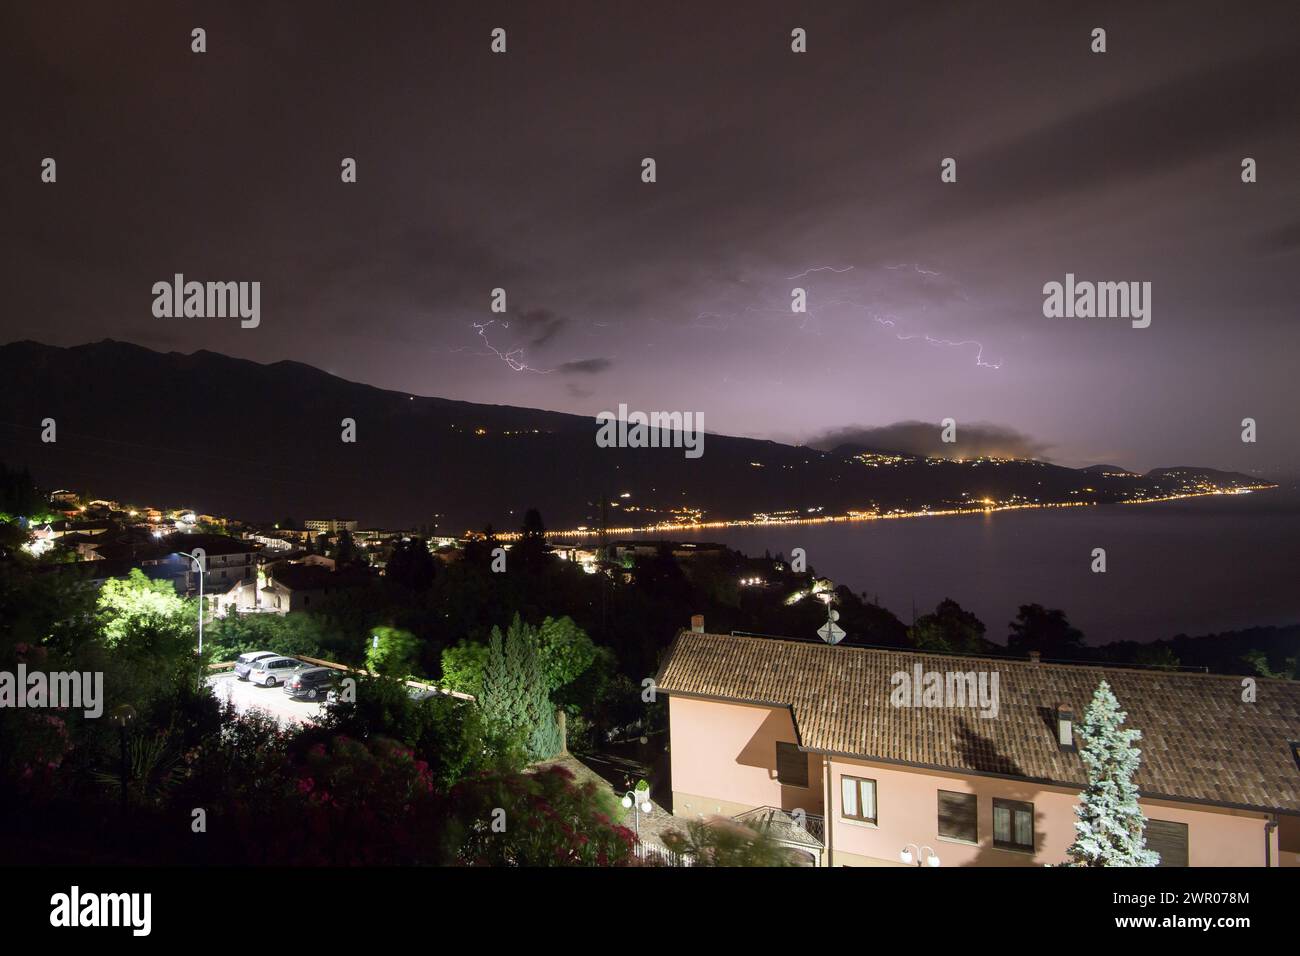 Lago di Garda (Lake Garda) seen from Gardola, Tignale, Lombardy, Italy © Wojciech Strozyk / Alamy Stock Photo Stock Photo